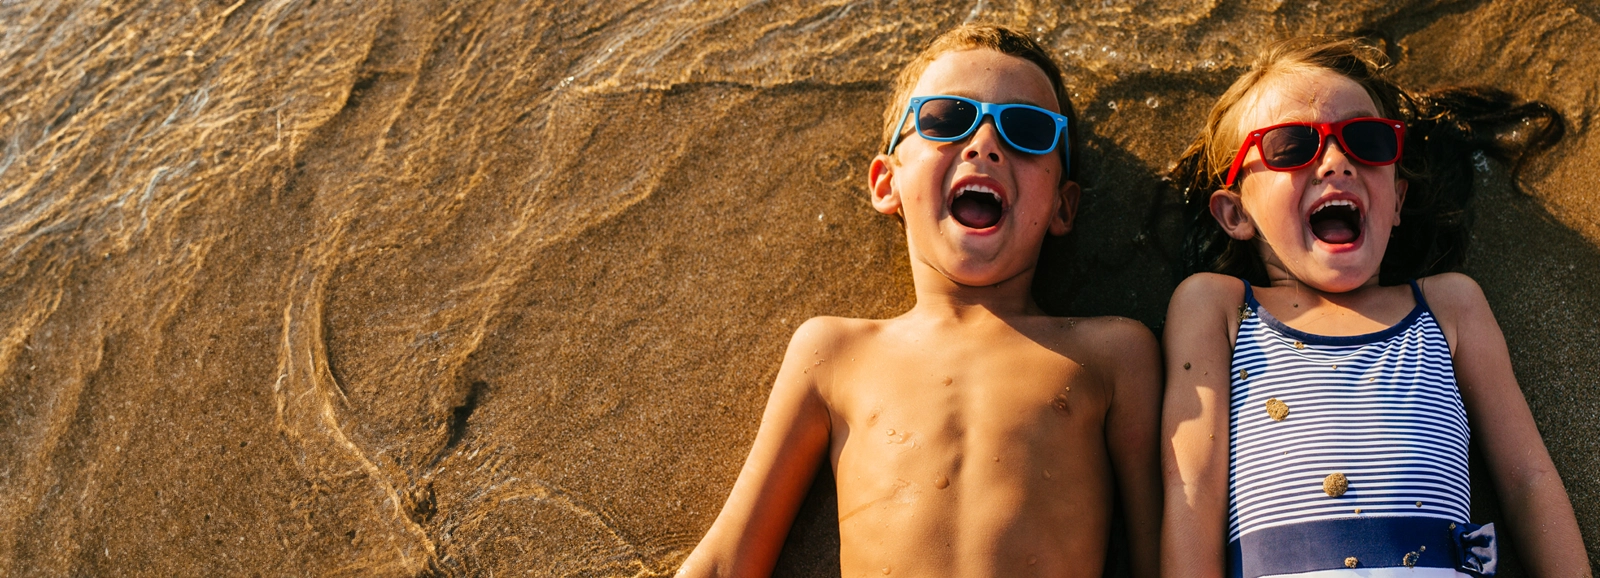 kids-in-sunglasses-laying-in-sand-1600x578-2_rev.webp